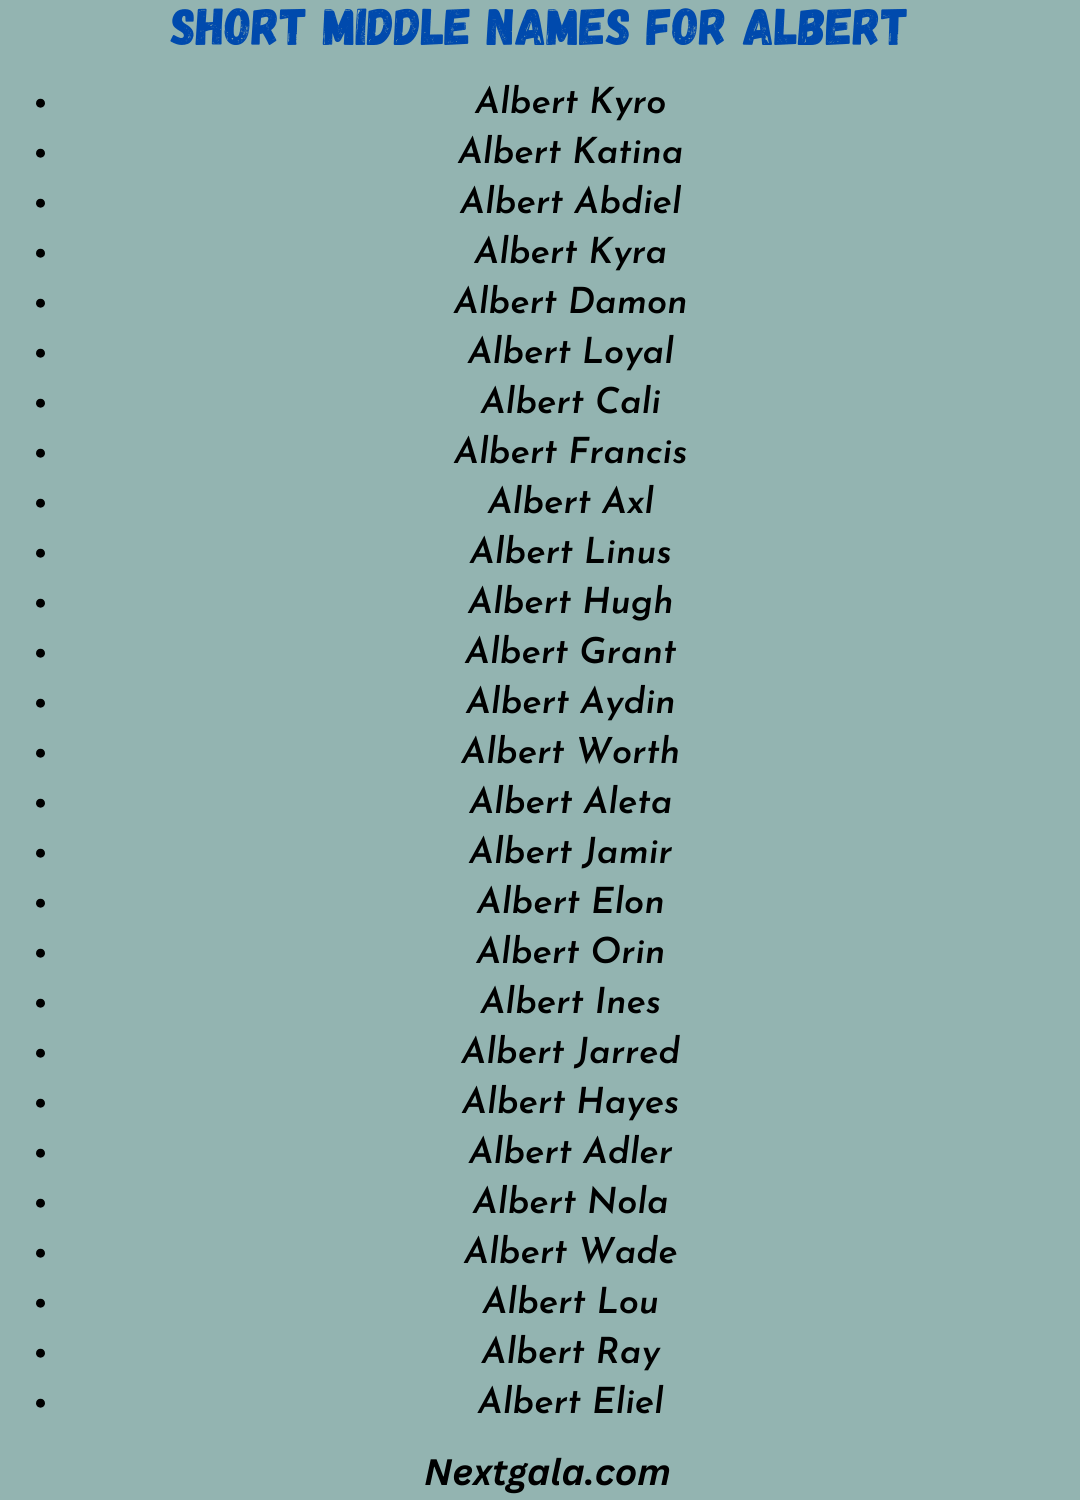 Short Middle Names for Albert